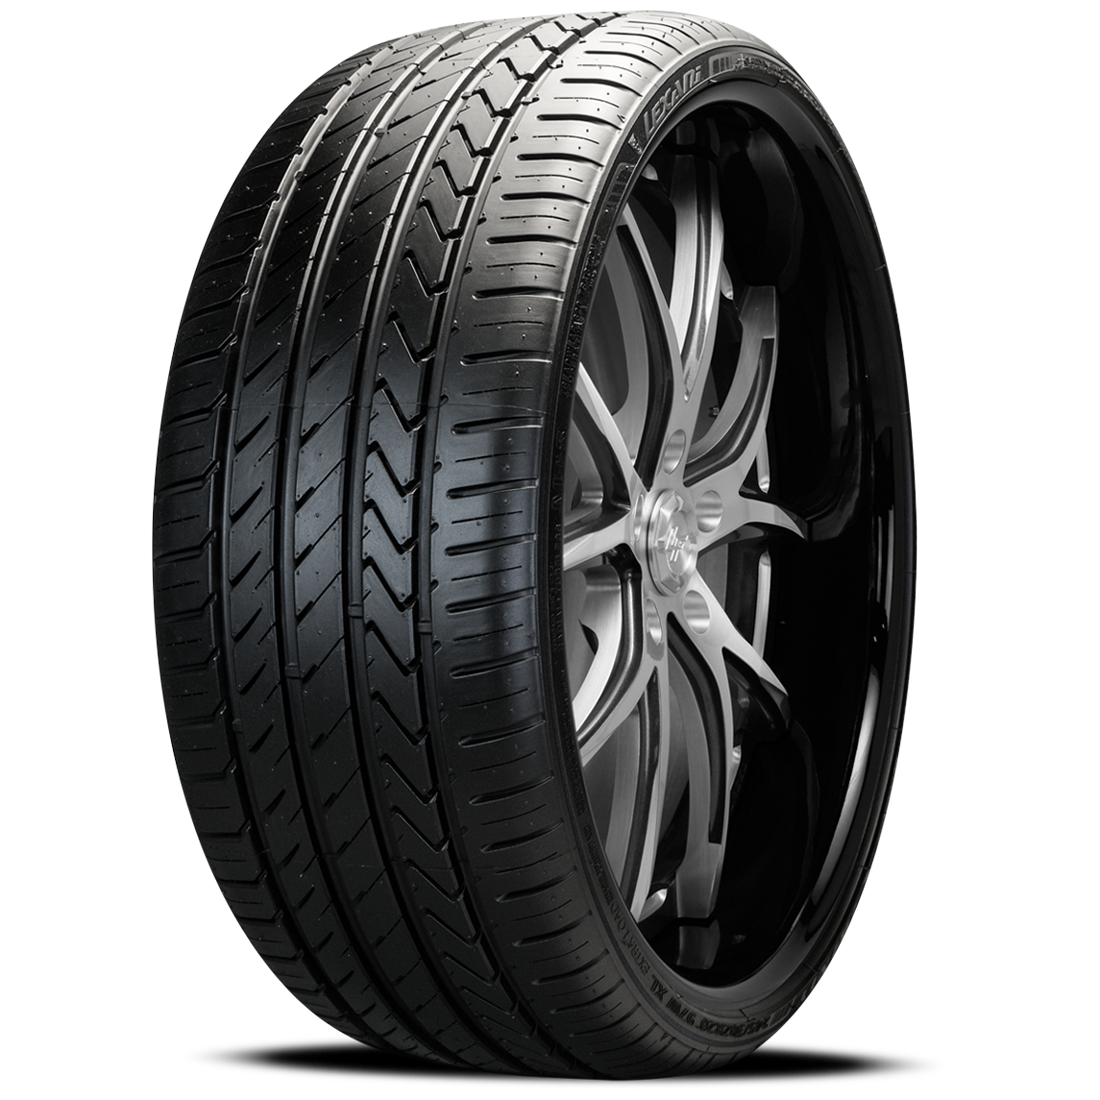 LEXANI LX-TWENTY 275/40ZR19 (27.7X10.9R 19) Tires